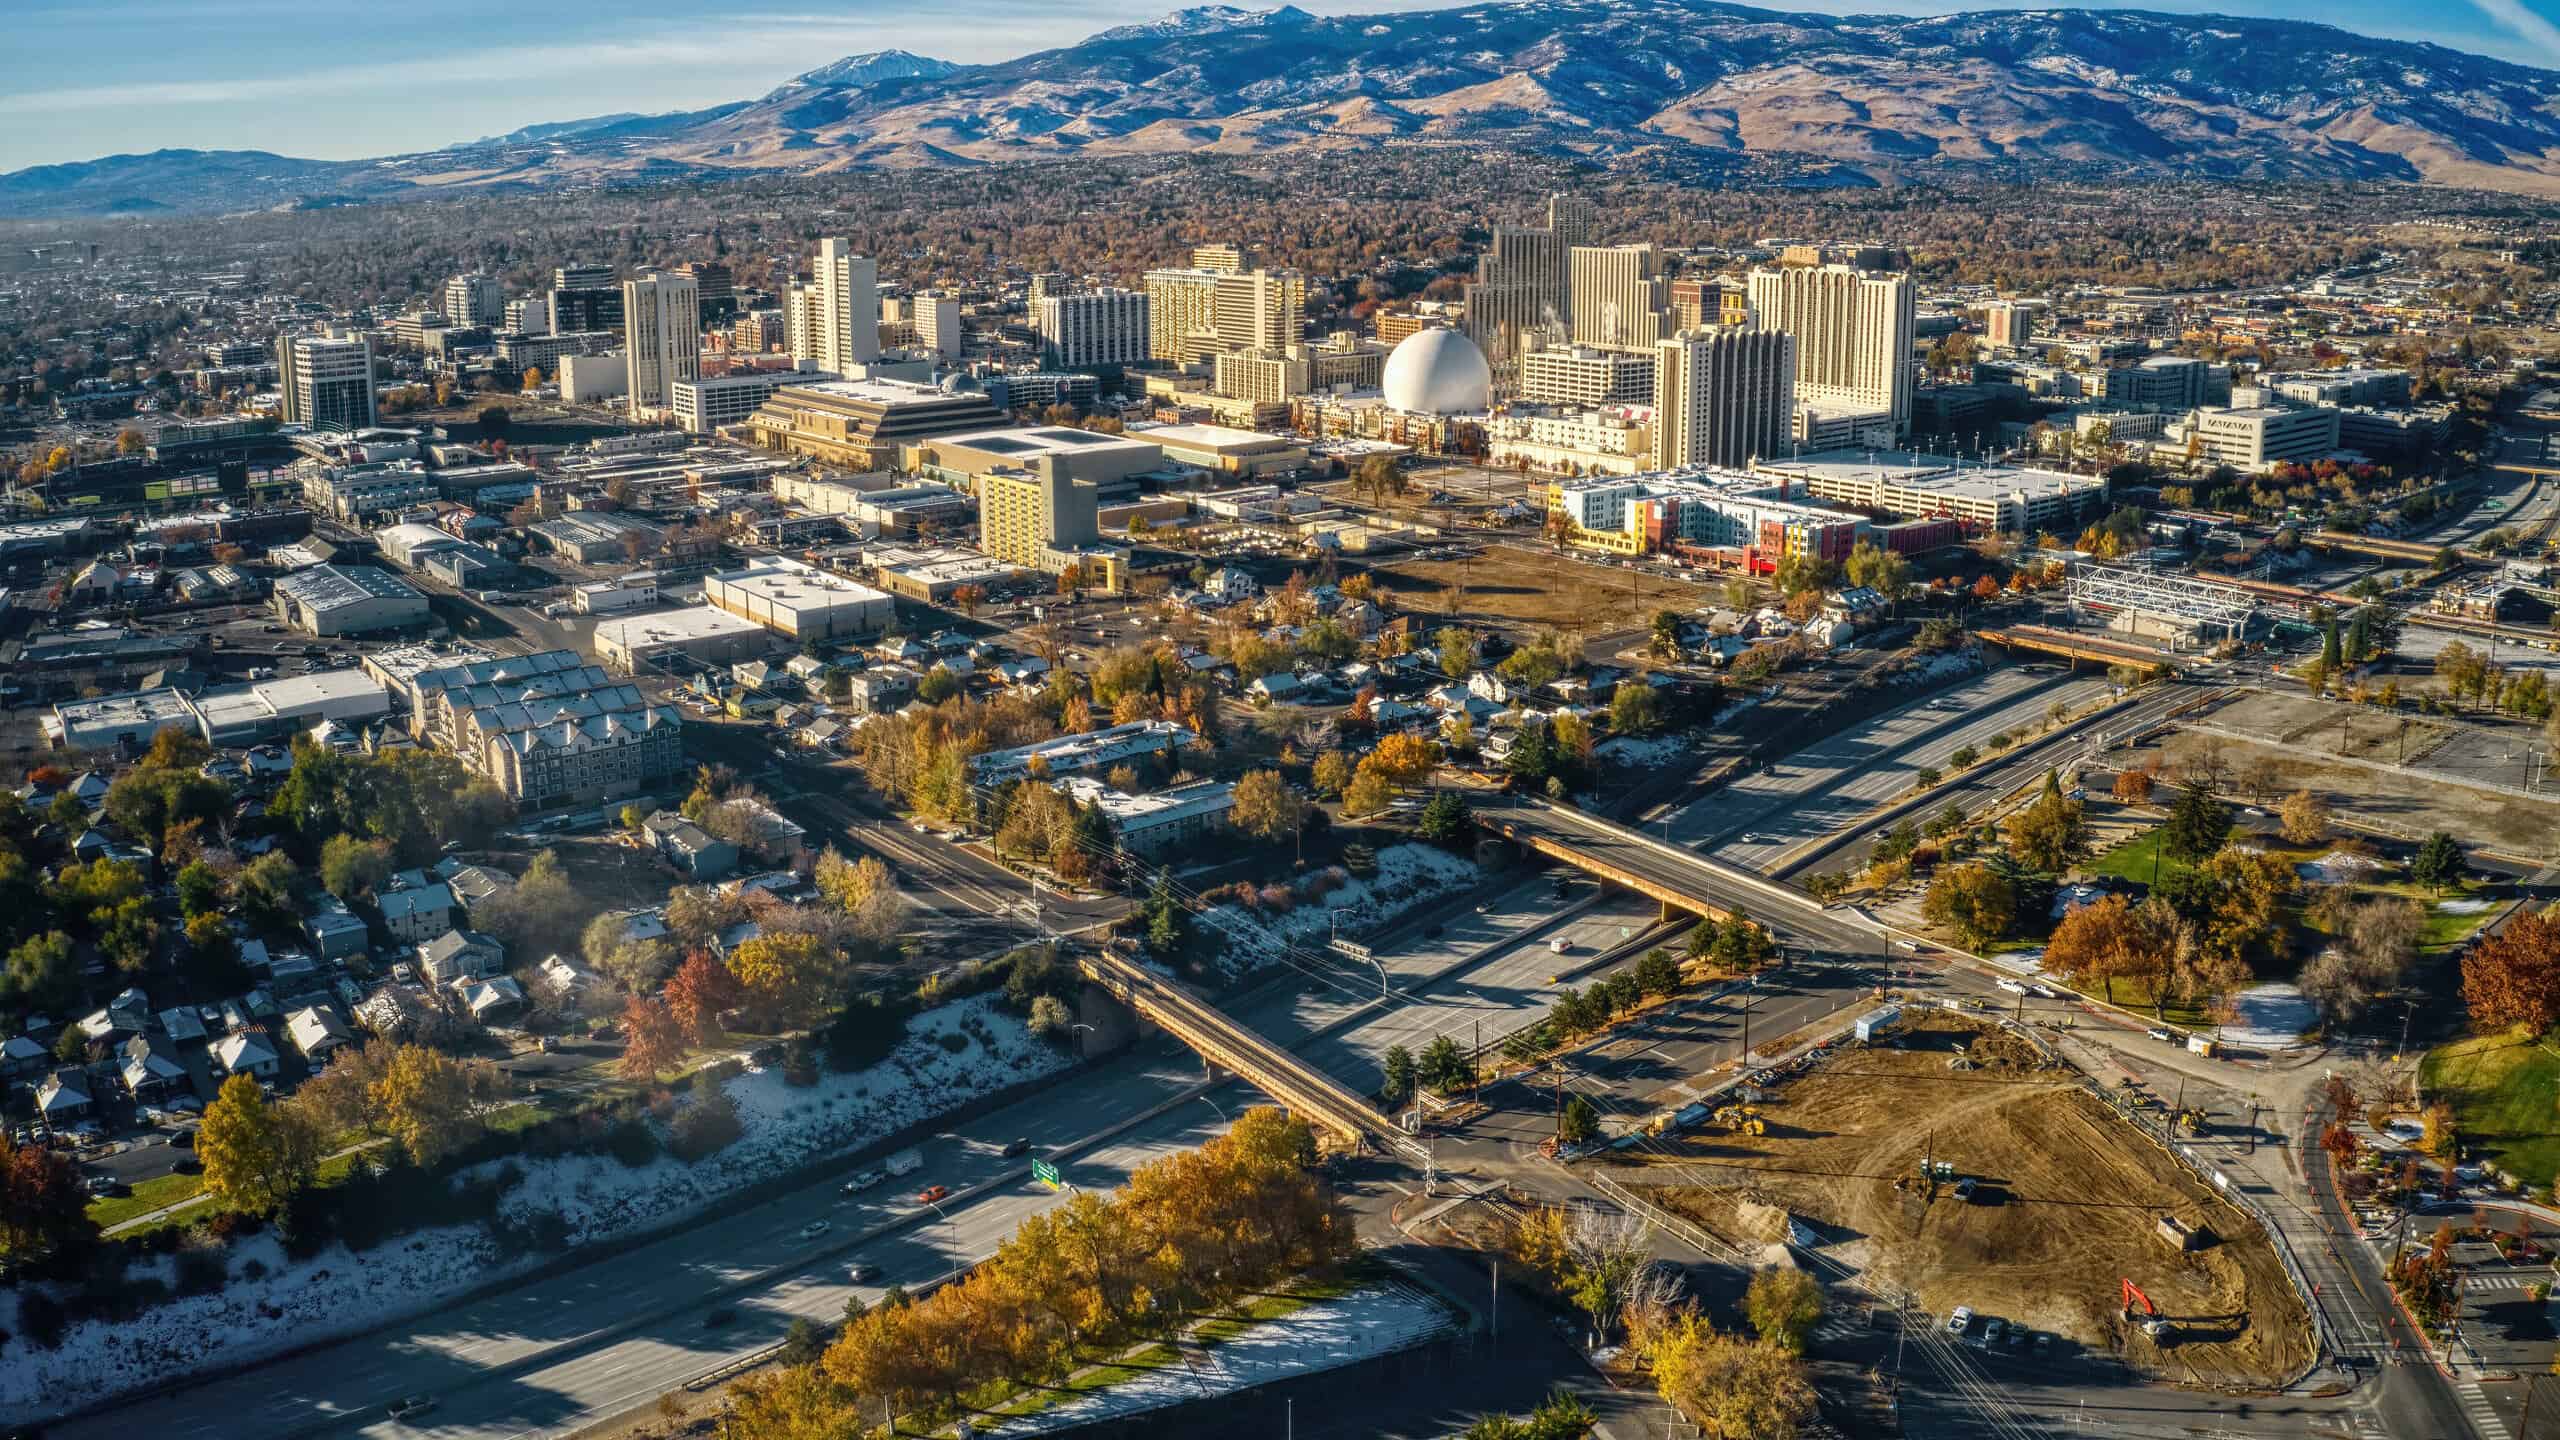 View of Reno Nevada skyline